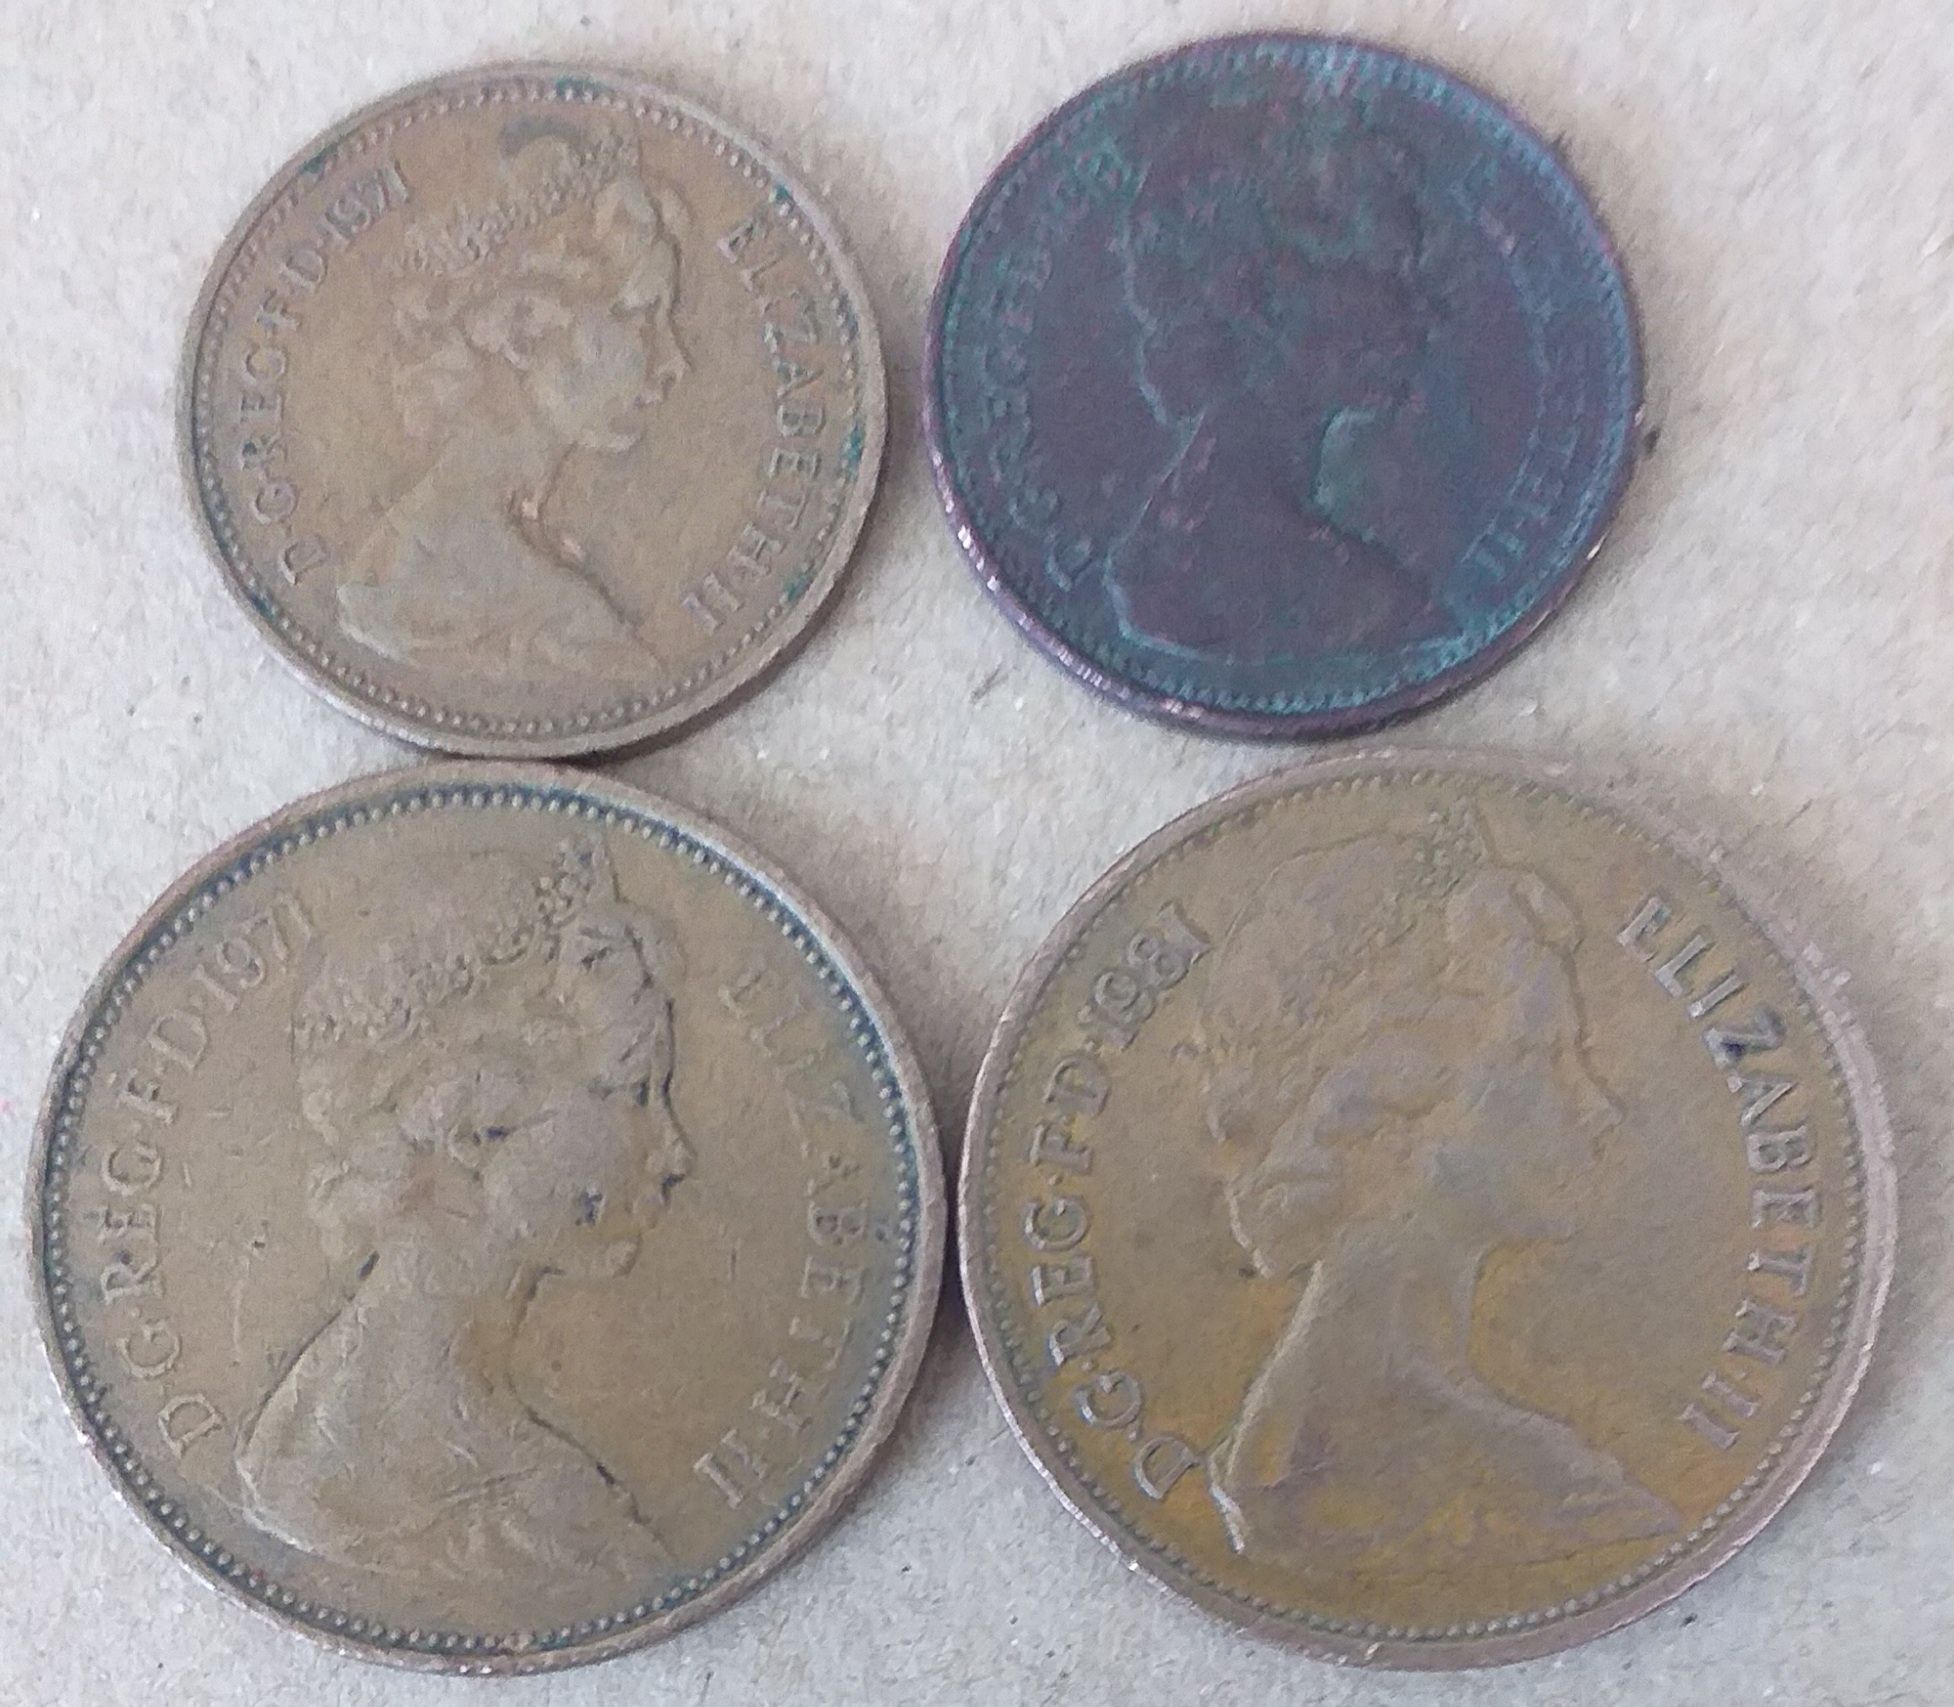 Monede :   1  și 2 New Pence, anii 1971 și 1981.